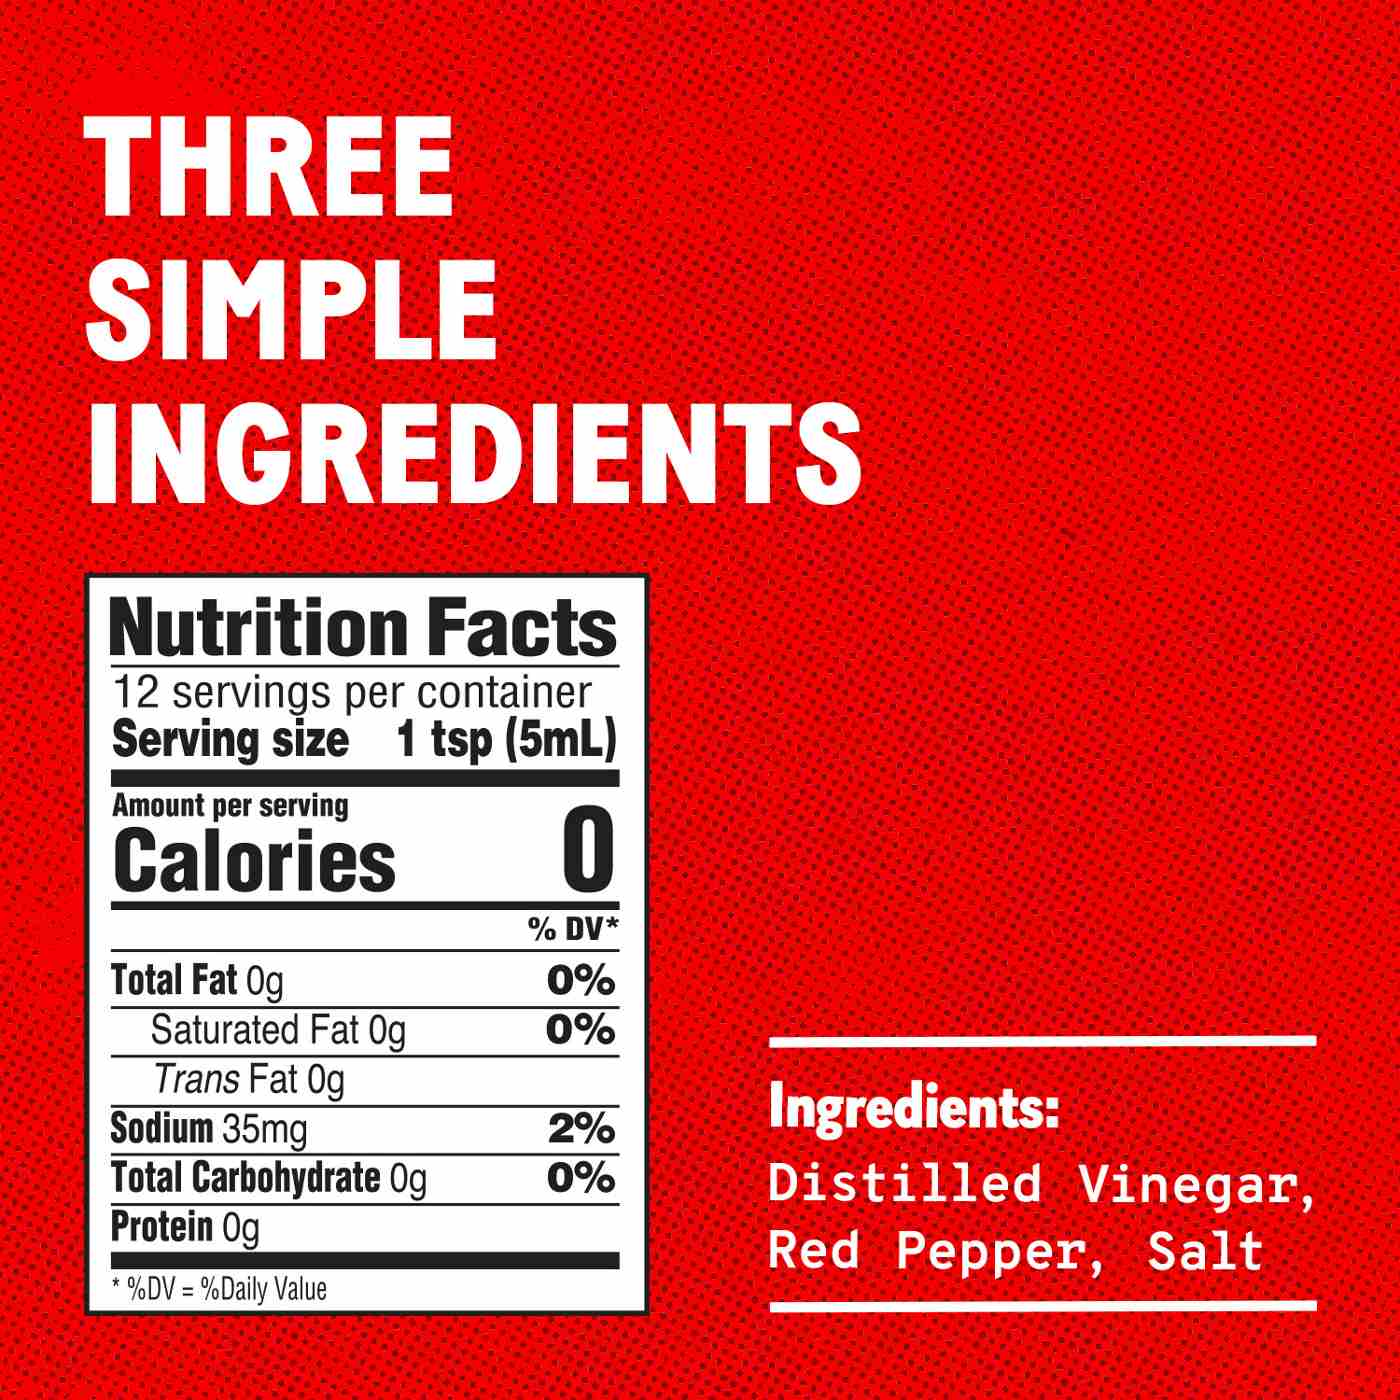 Tabasco Original Red Pepper Sauce; image 4 of 8